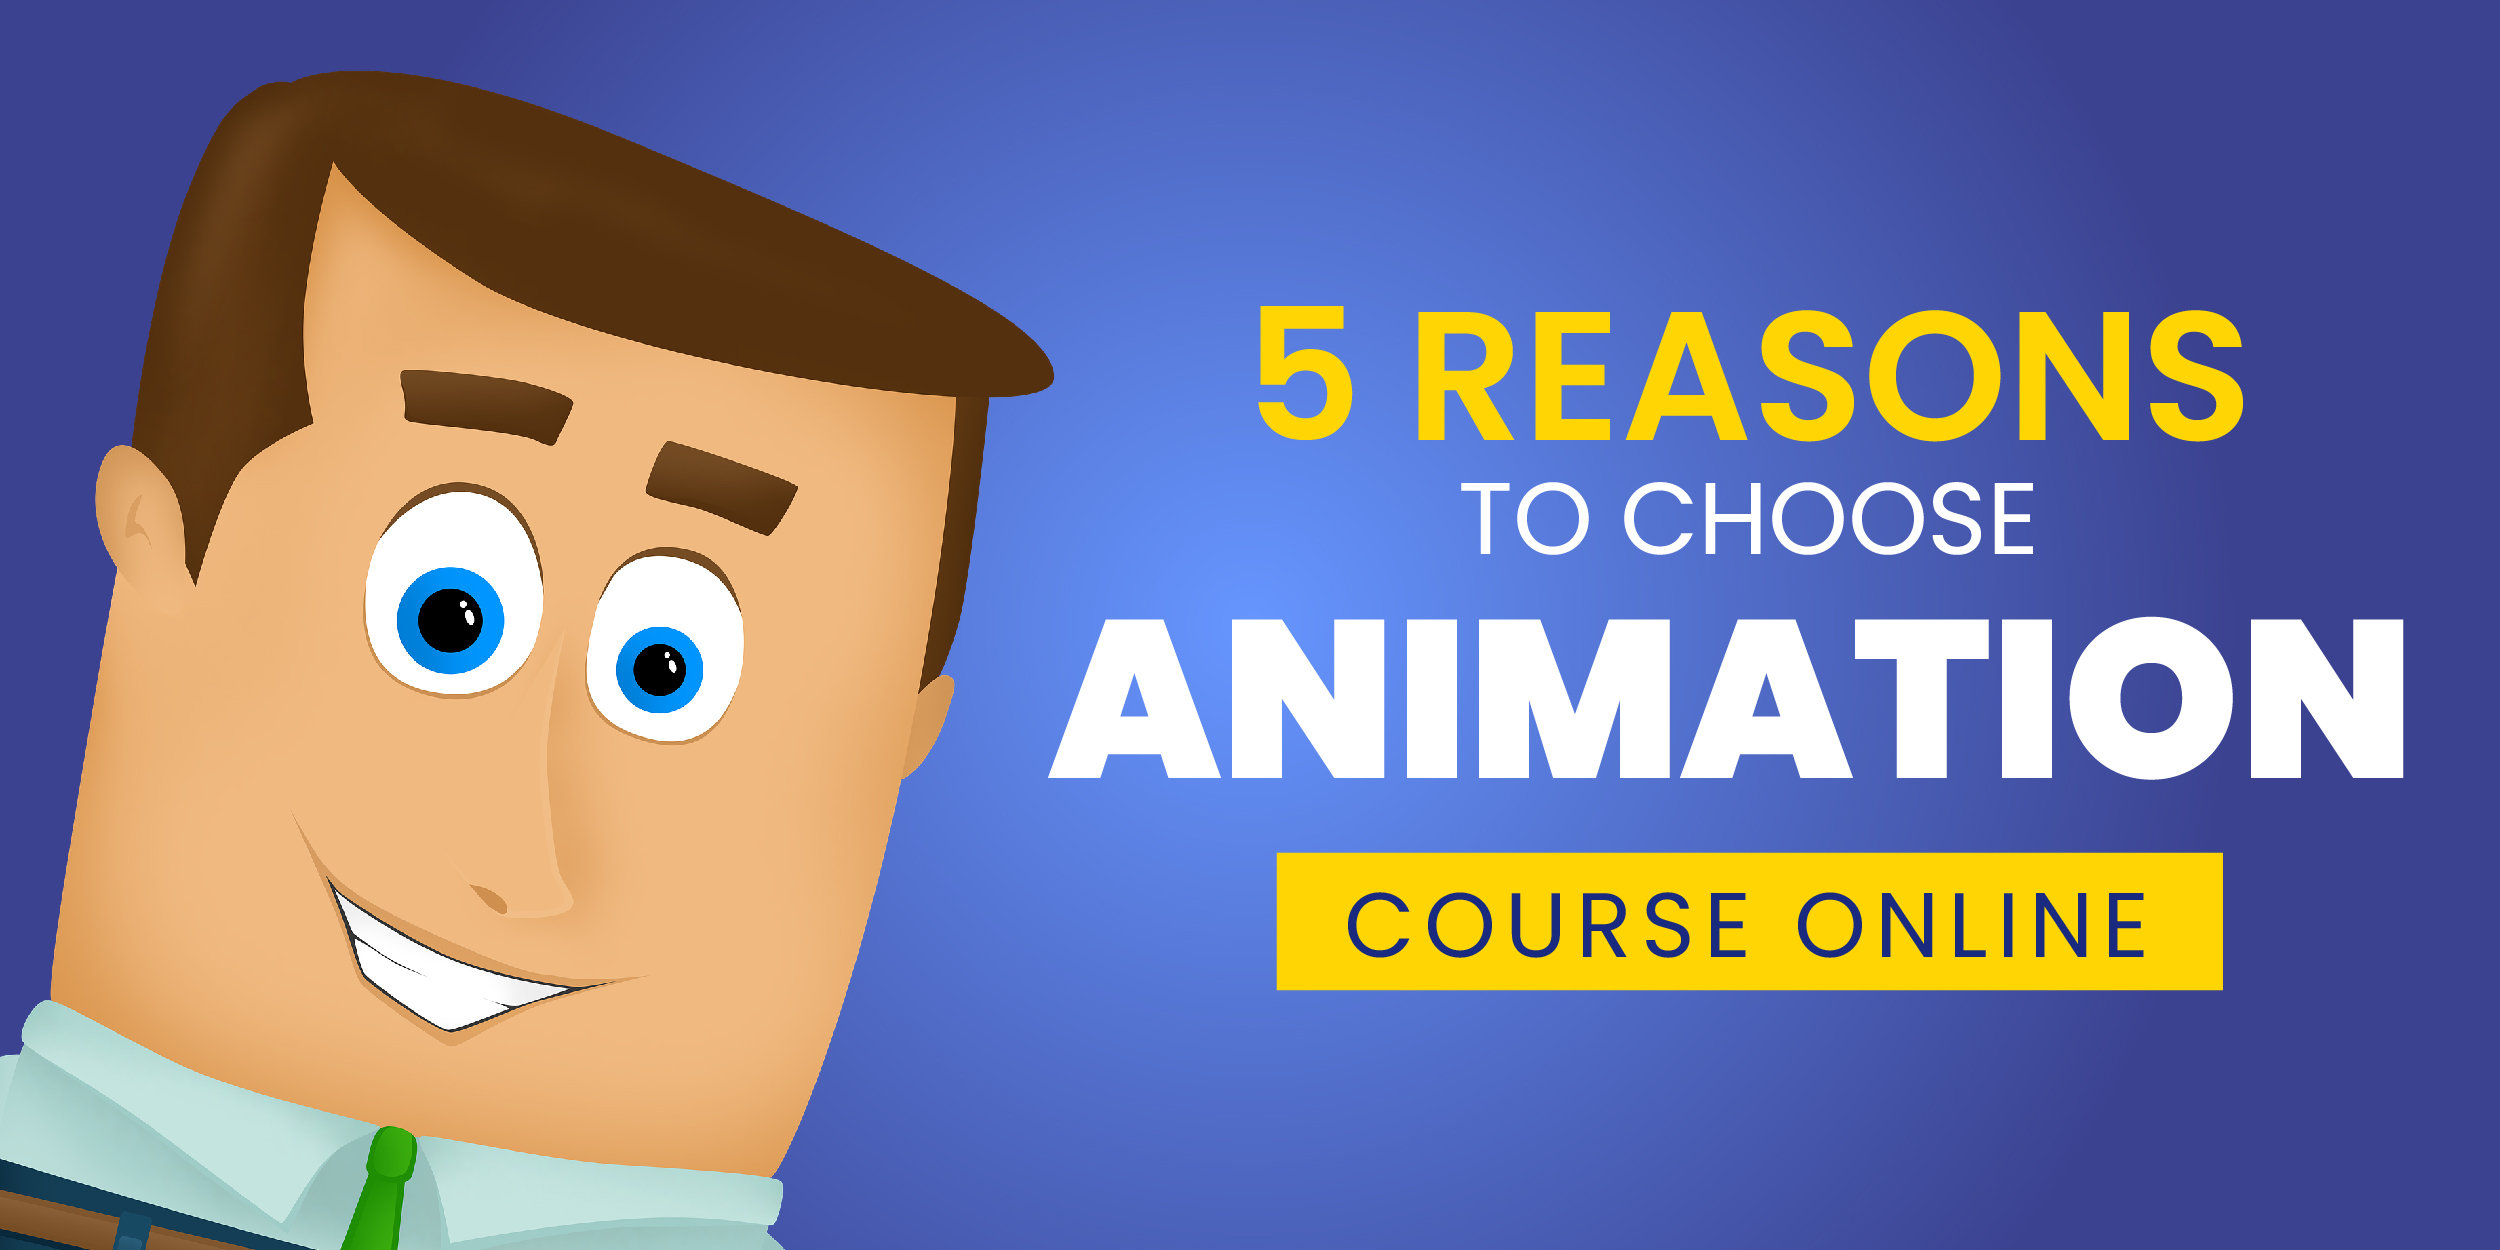 5 Reasons to choose Animation Course Online : Blog by Kshitj Vivan